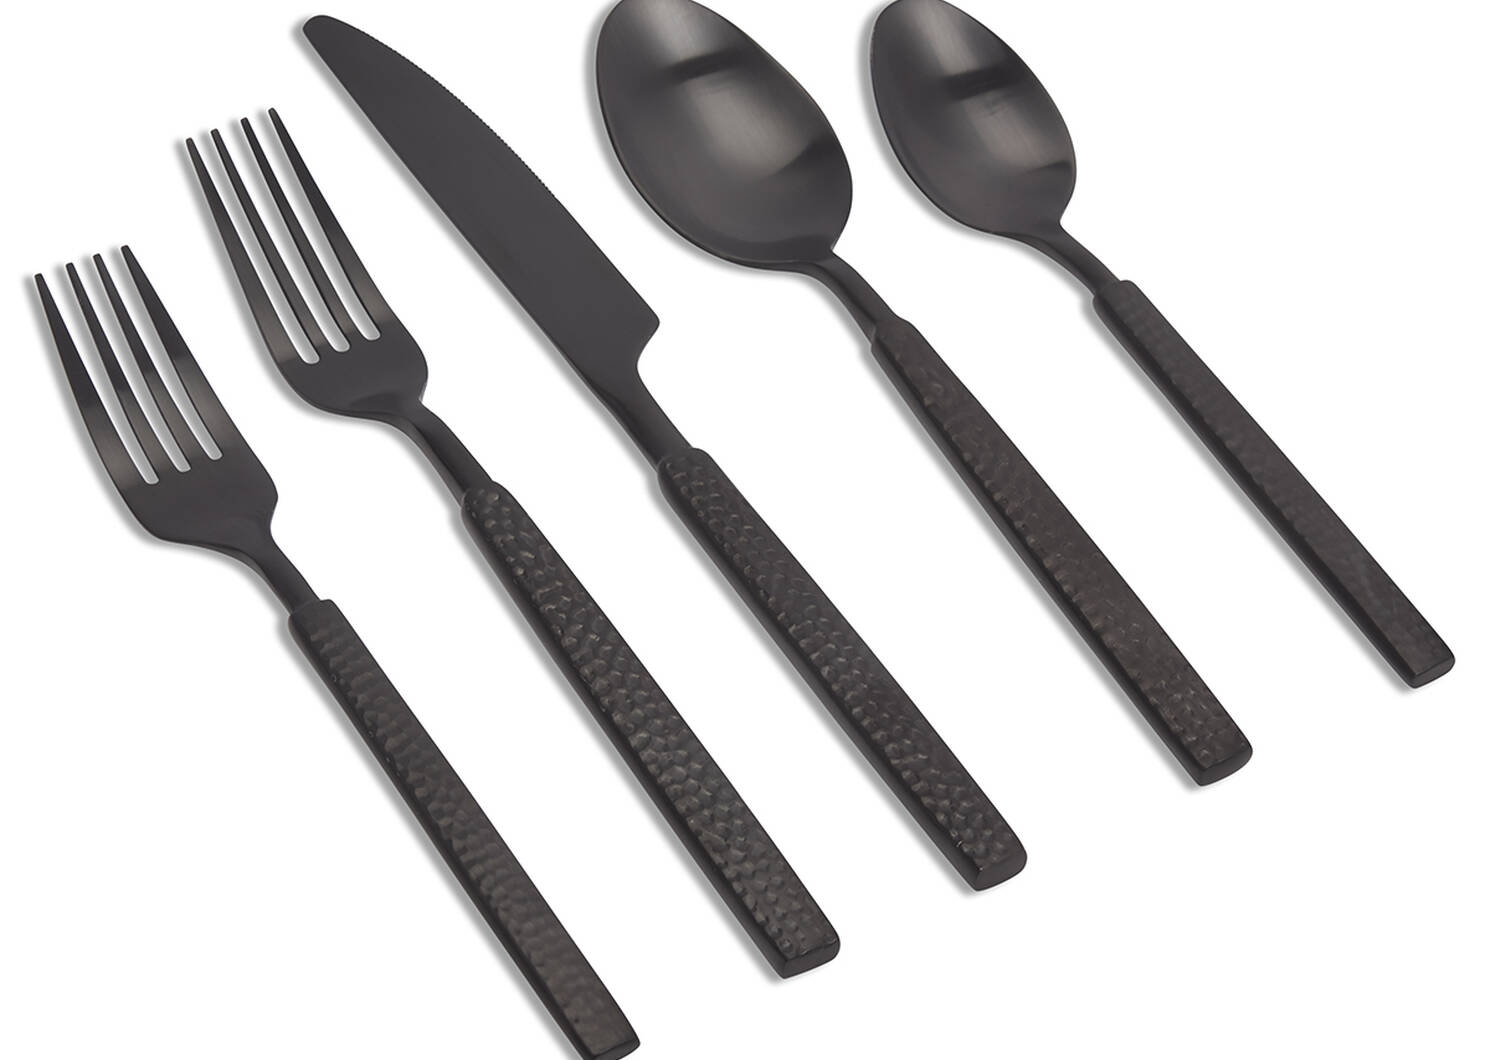 Hammered 5pc Cutlery Set Matte Black